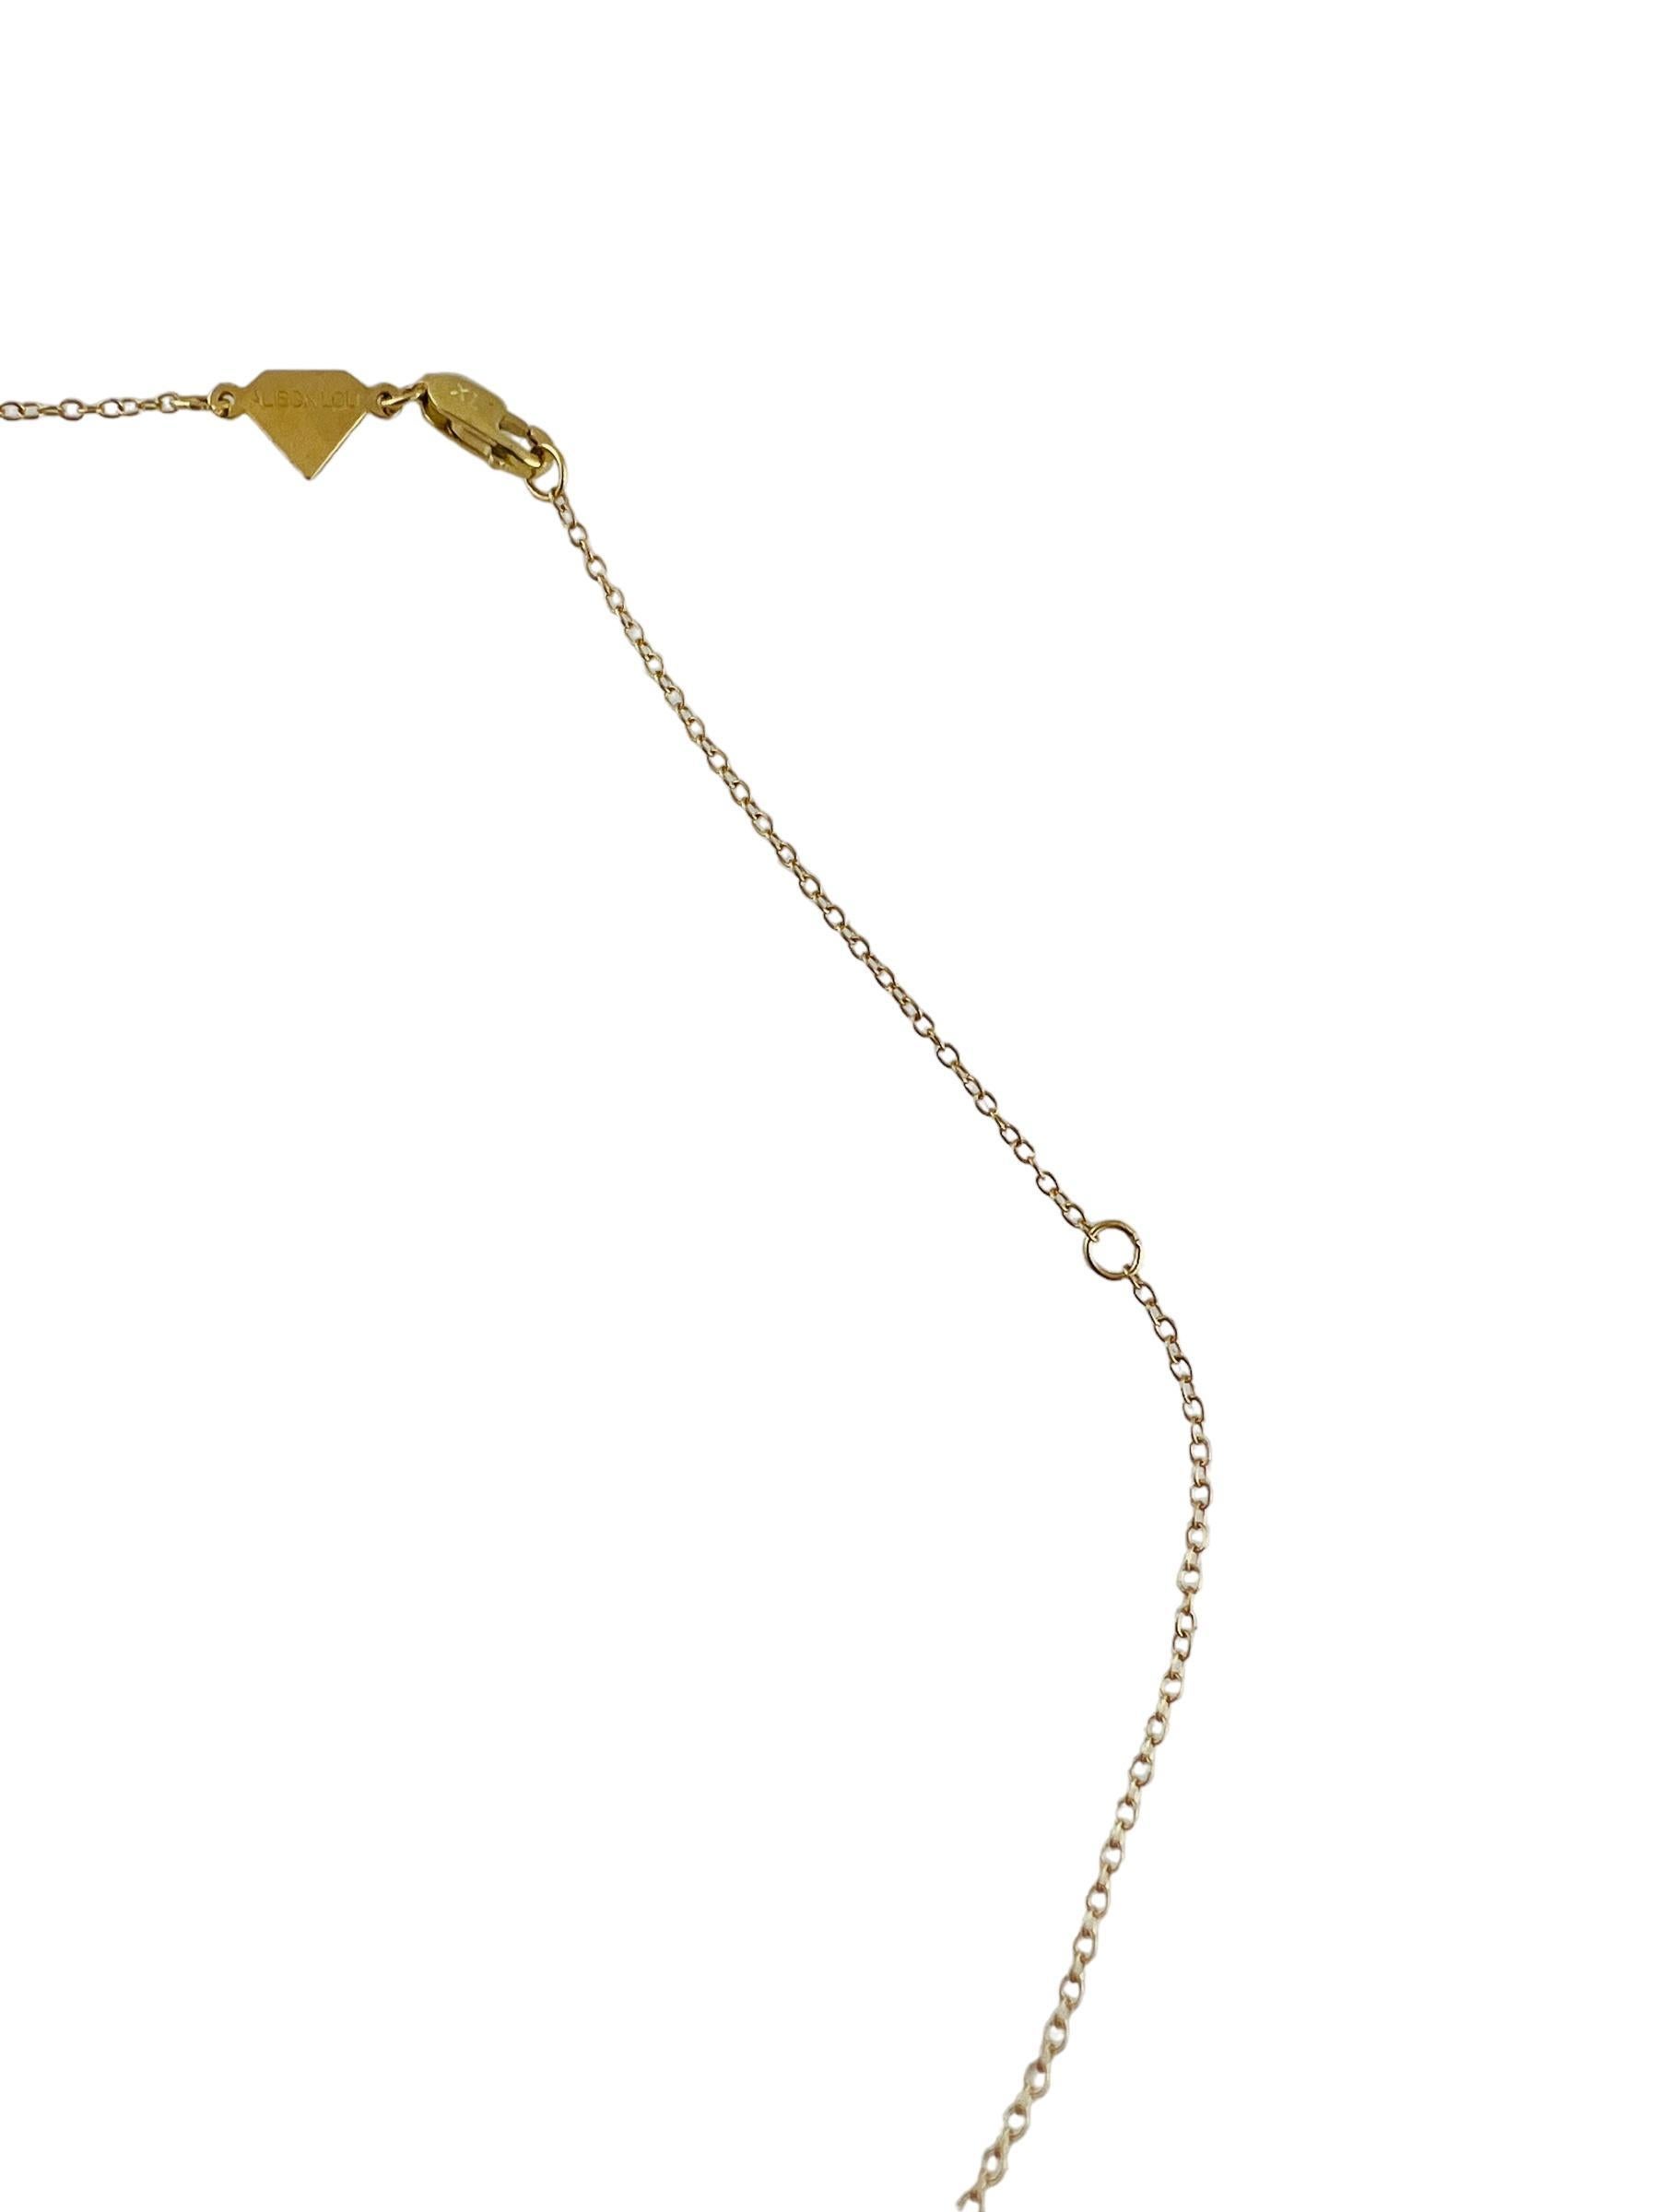 Alison Lou 14K Yellow Gold Adjustable Chain 16 - 18